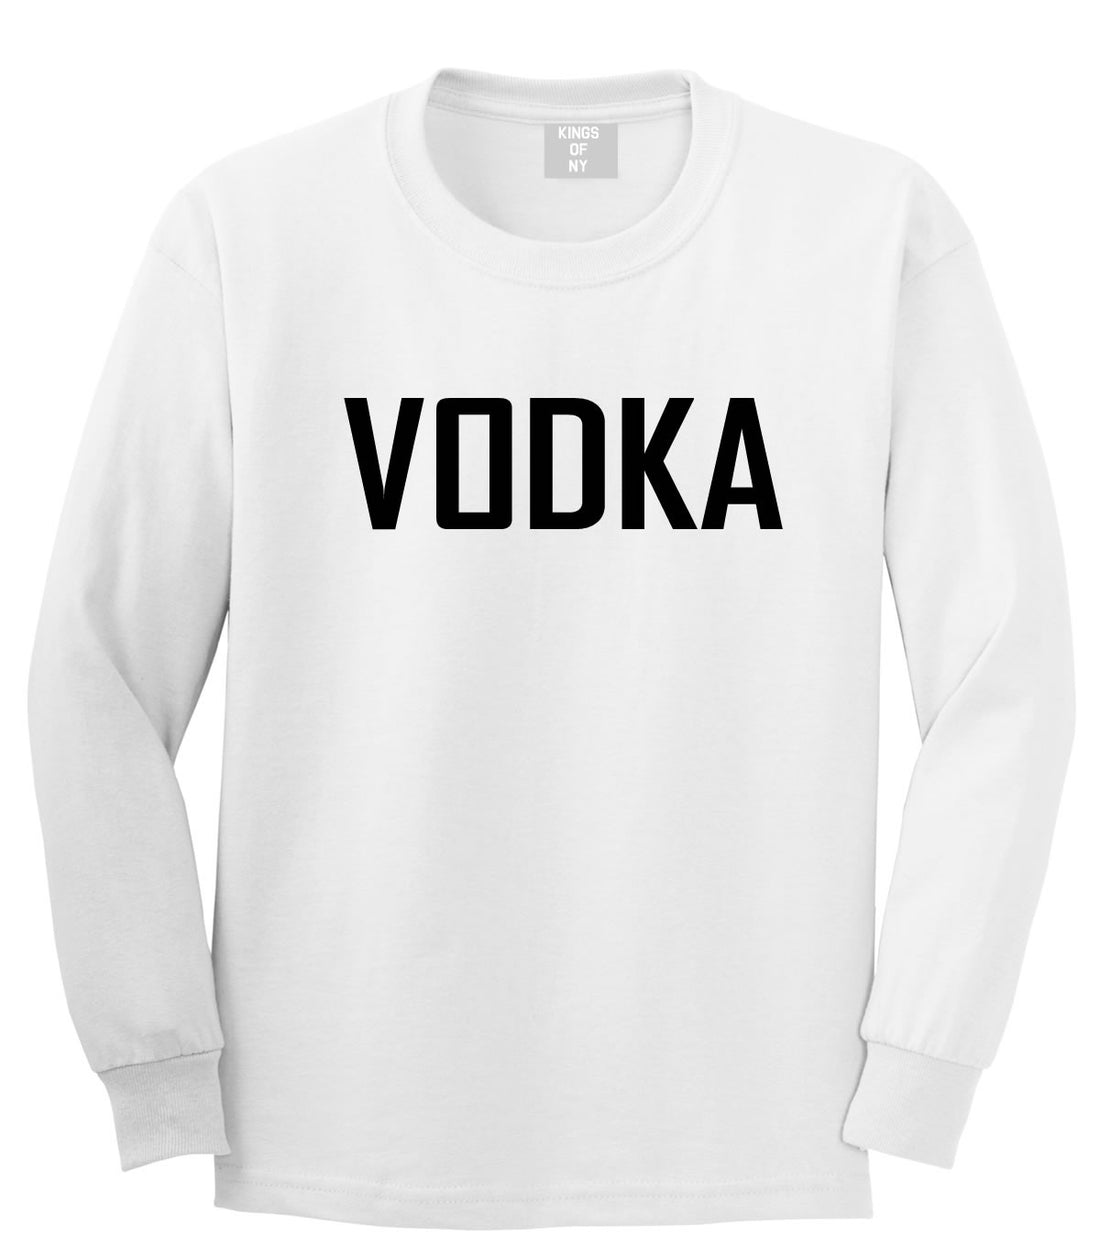 Vodka Long Sleeve T-Shirt by Kings Of NY